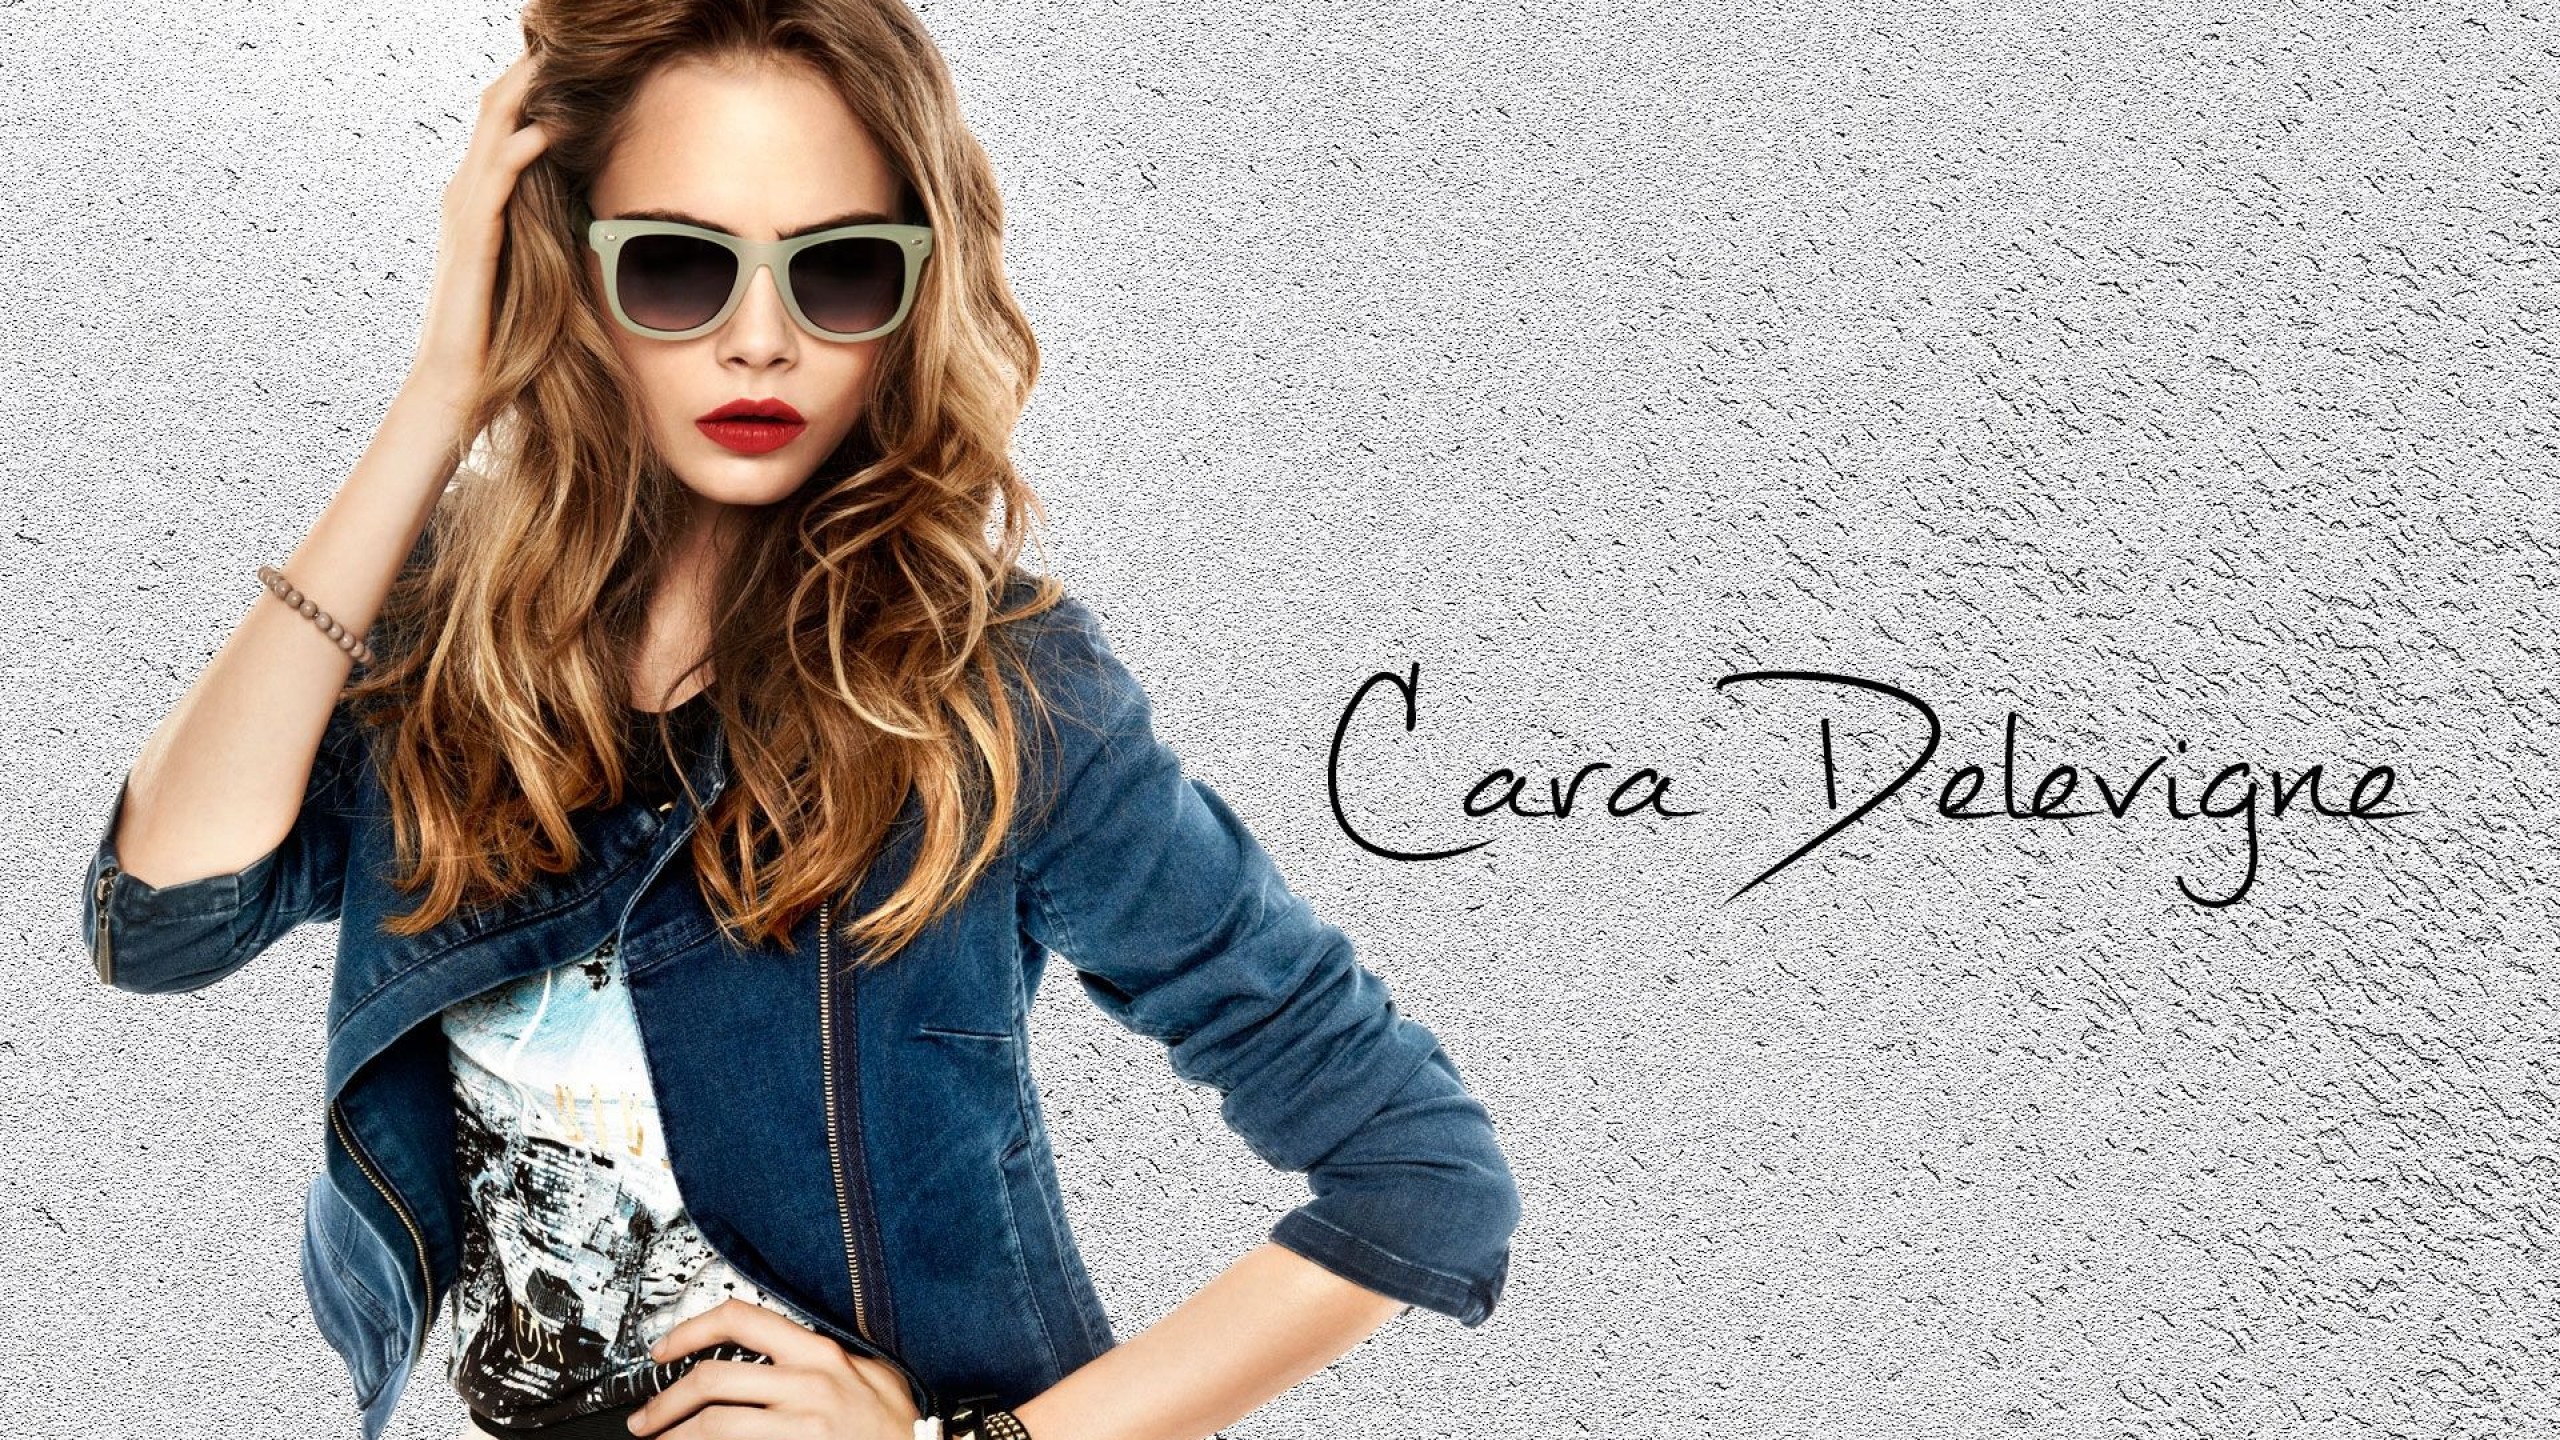 Cara Delevingne Pics - Wallpaper, High Definition, High Quality, Widescreen